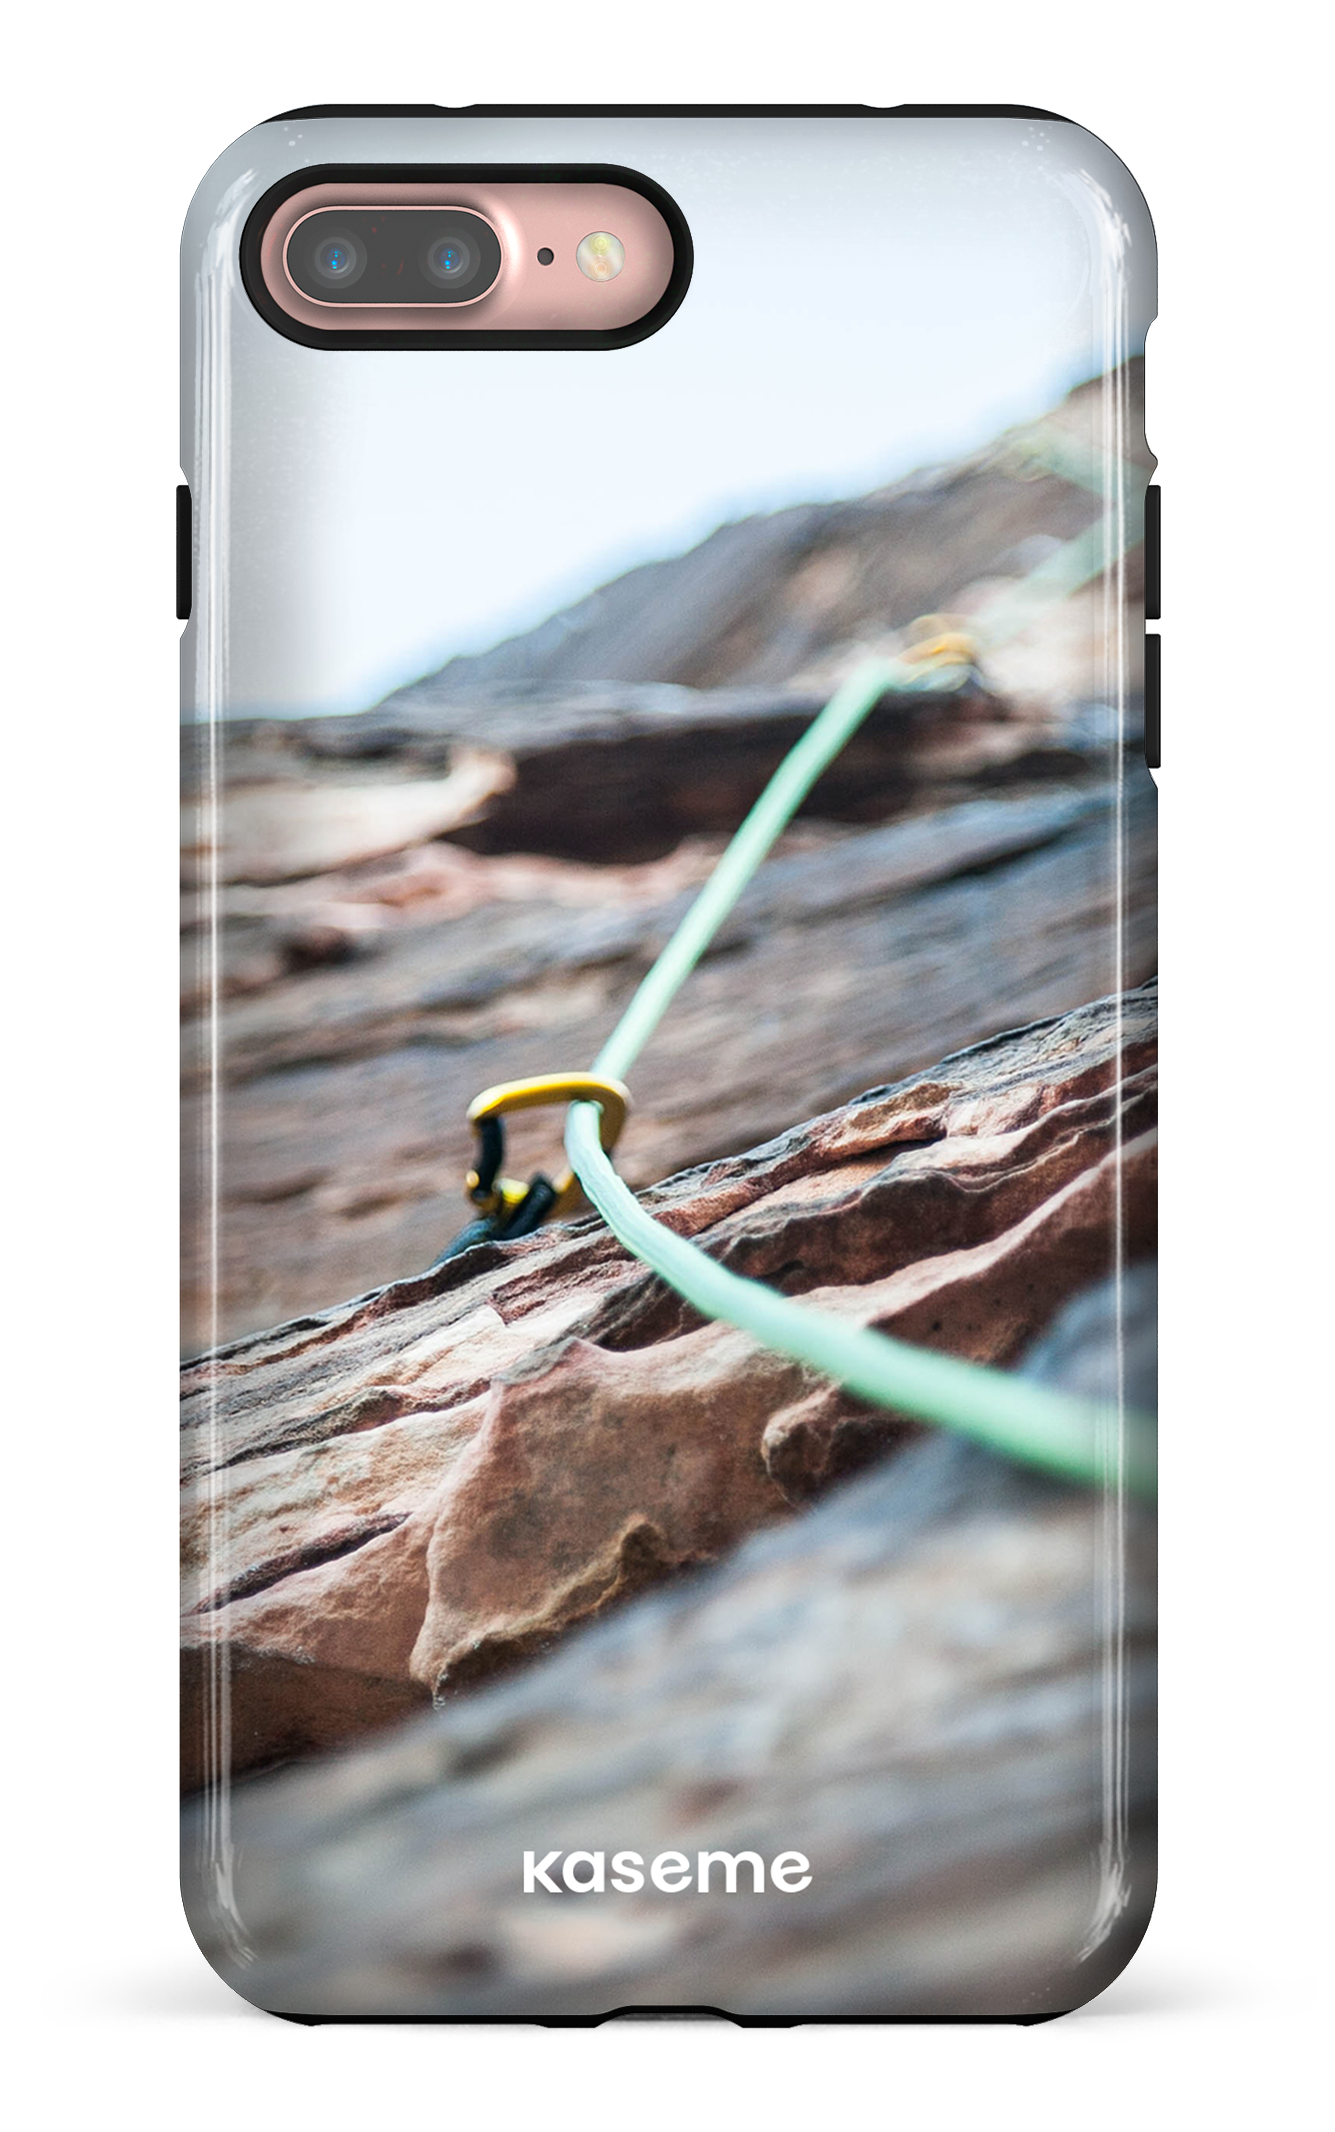 Top rope - iPhone 7 Plus